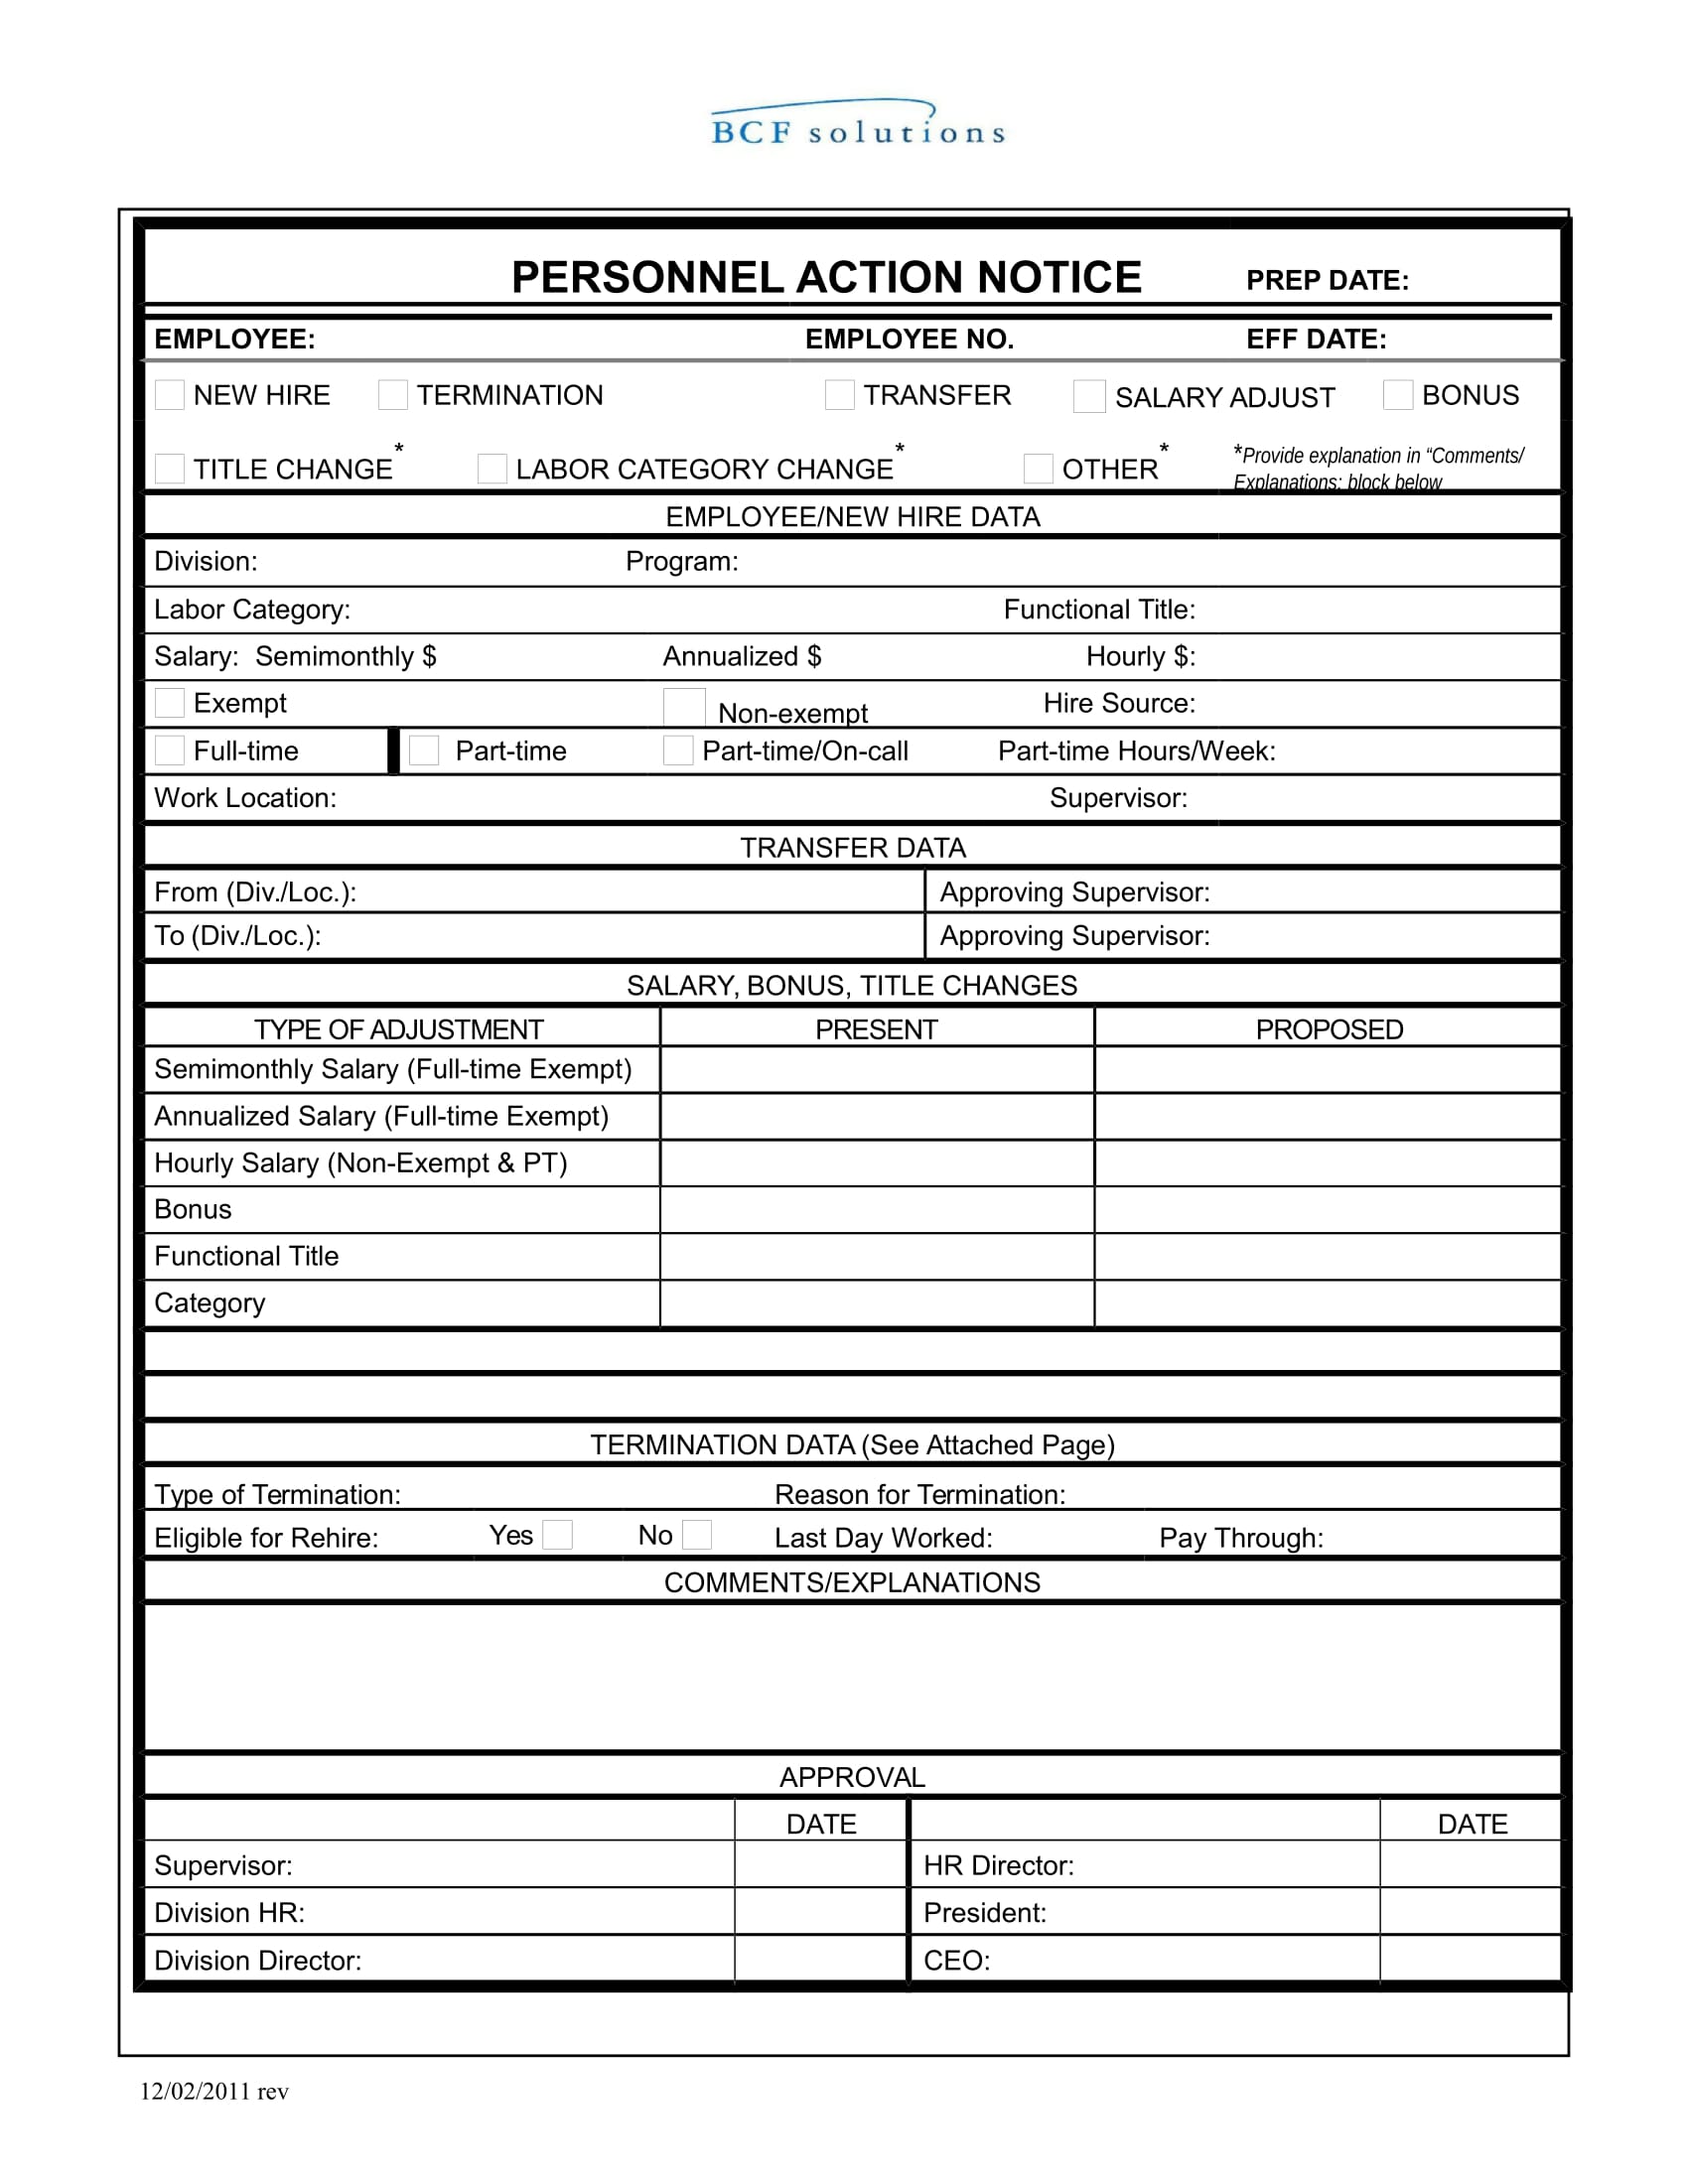 personnel action notice form 1